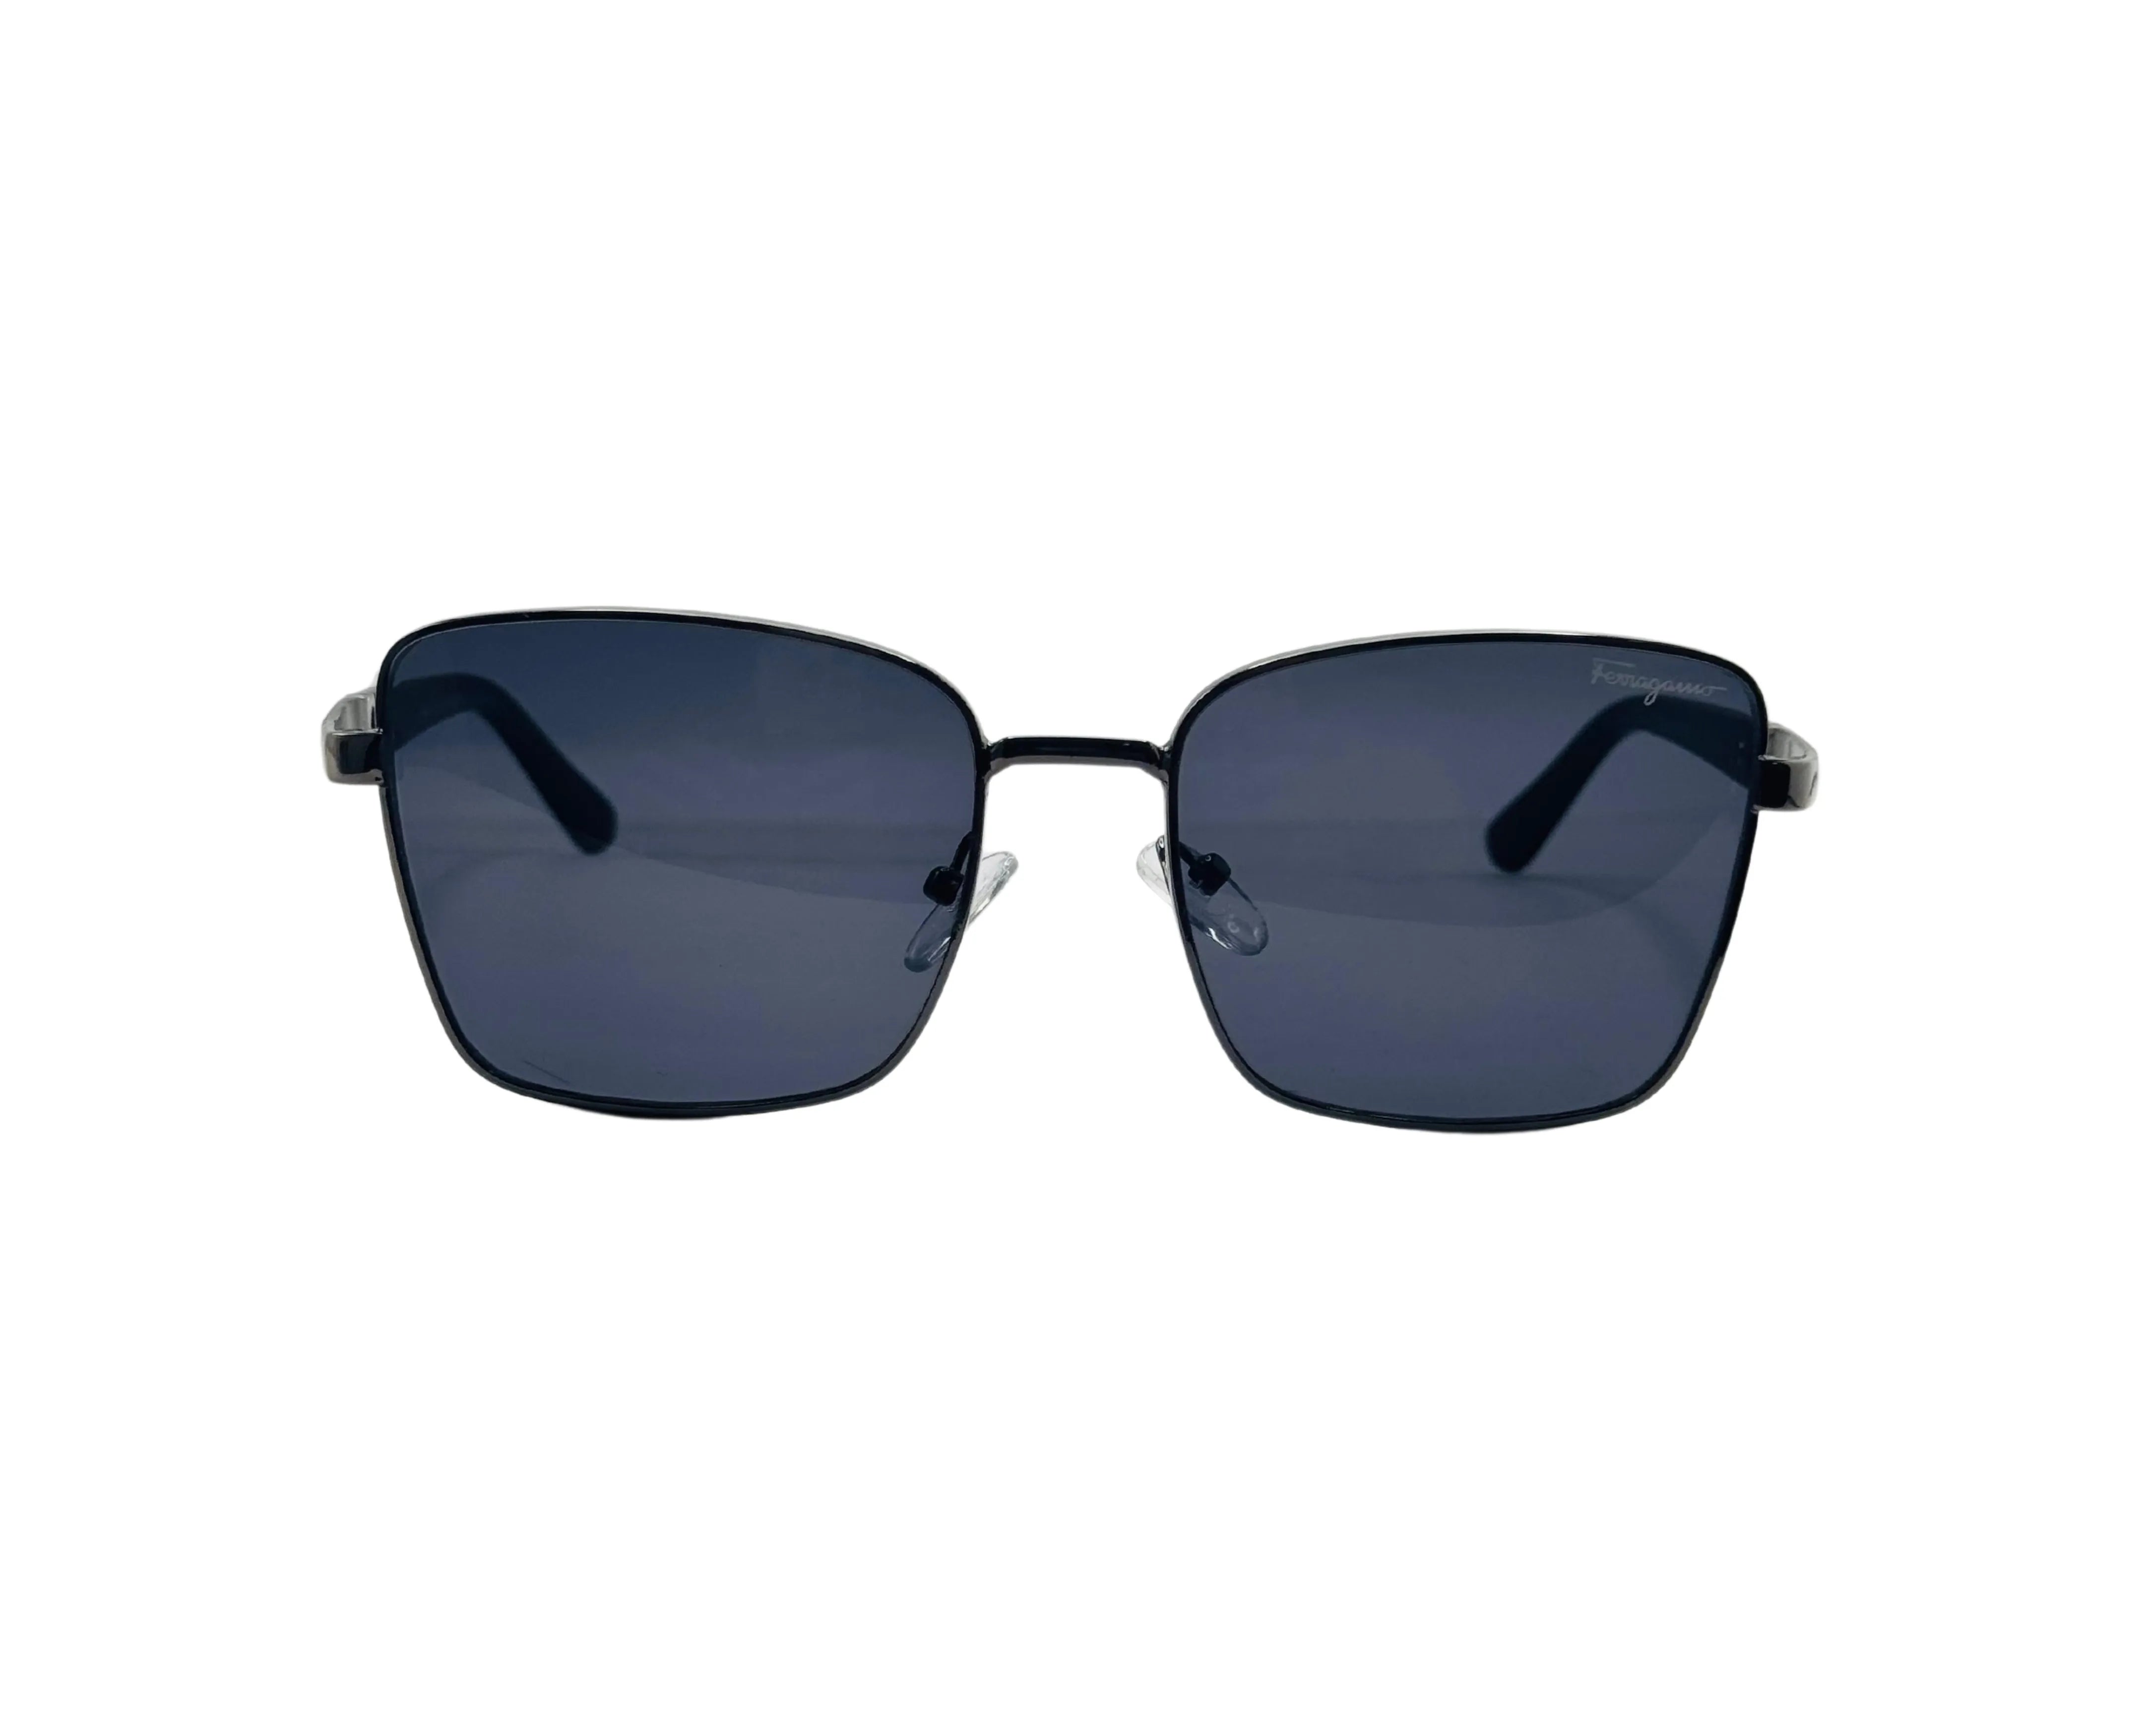 NS Deluxe - 373 - Black - Sunglasses